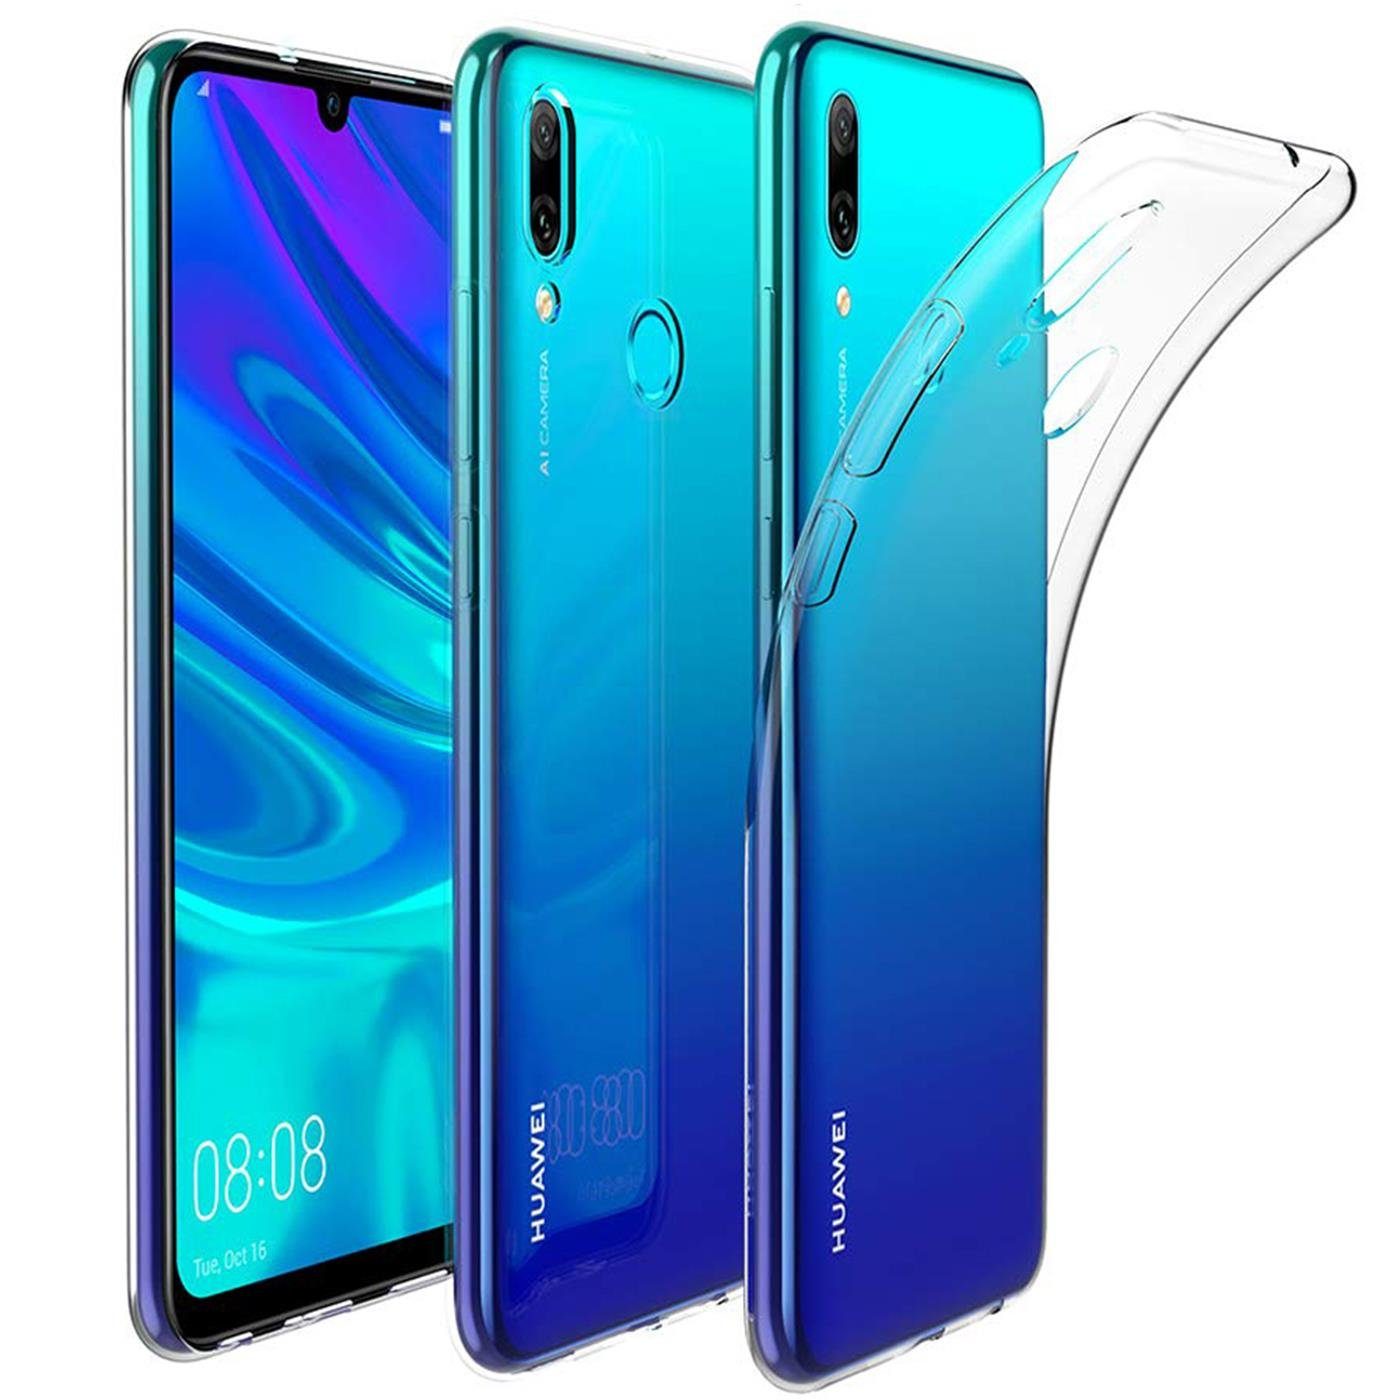 CoolGadget Handyhülle Transparent Ultra Slim Case für Huawei P Smart 2019 6,2 Zoll, Silikon Hülle Dünne Schutzhülle für Huawei P Smart 2019 Hülle